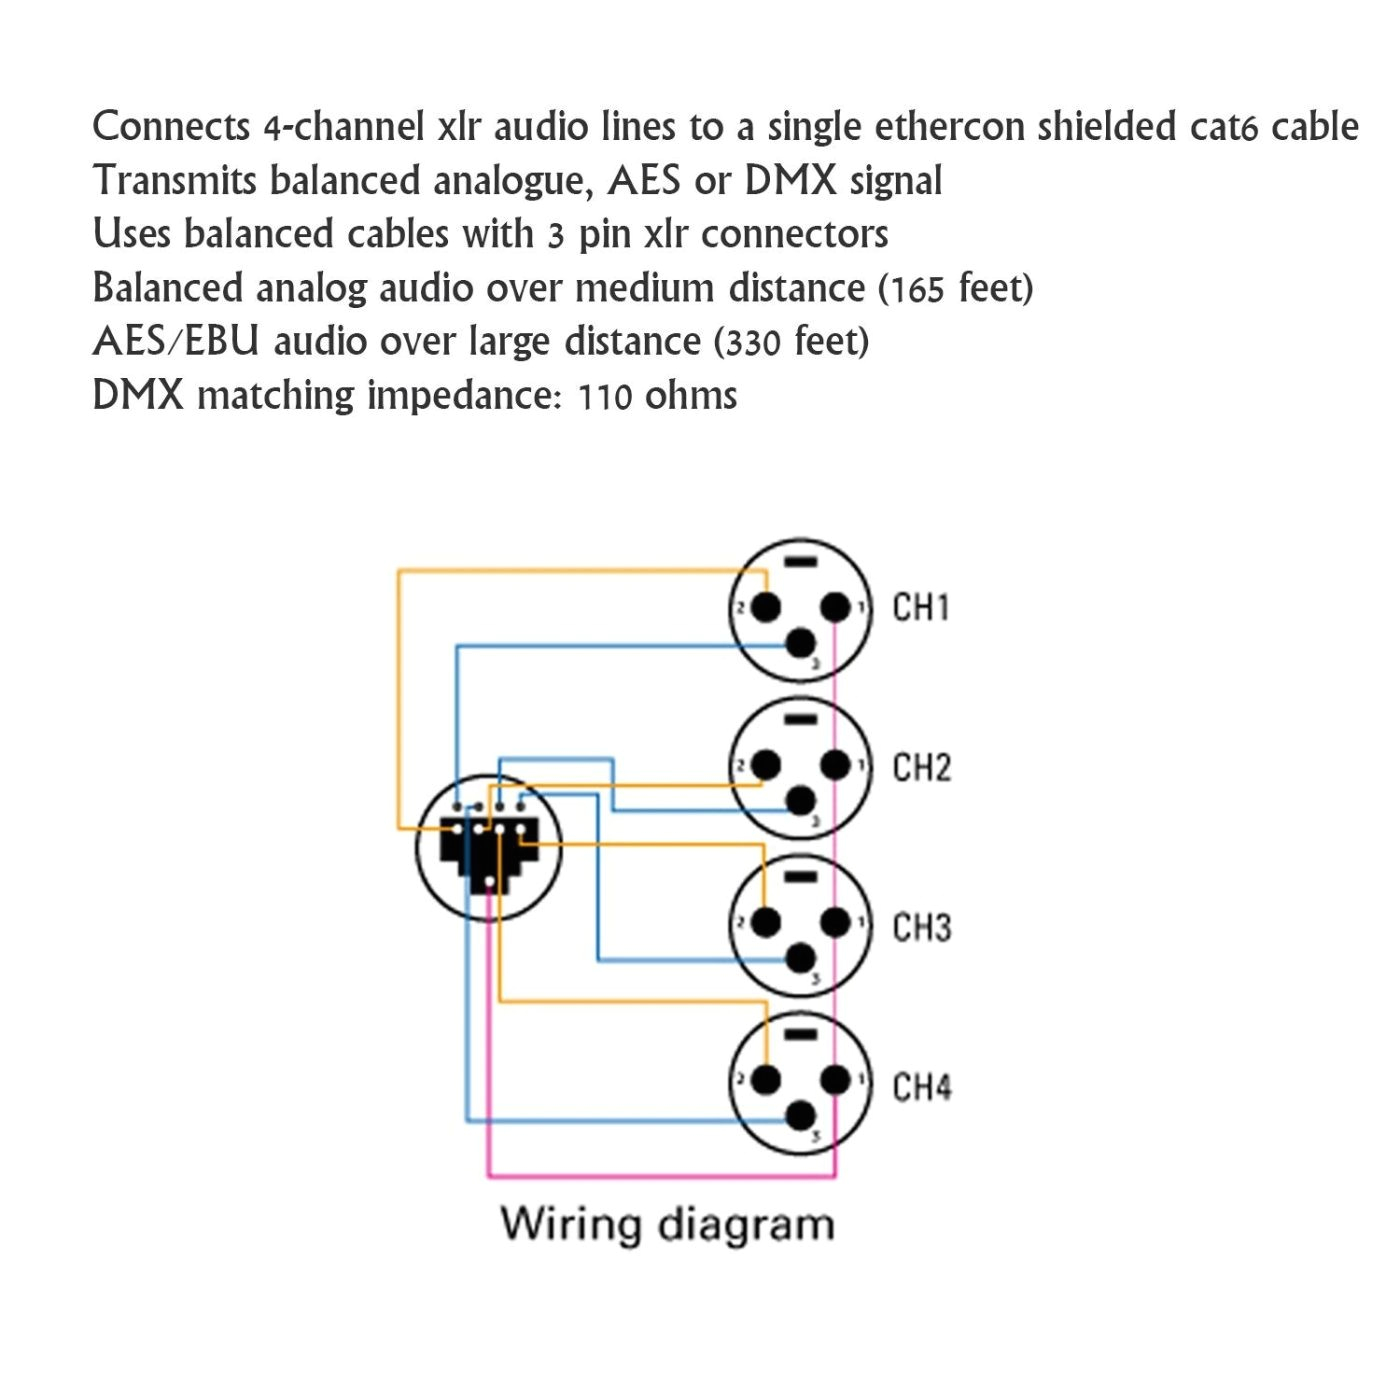 wiring diagram for xlr to trs best xlr wiring diagram balanced fresh charming balanced xlr wiring of wiring diagram for xlr to trs at xlr wiring diagram jpg